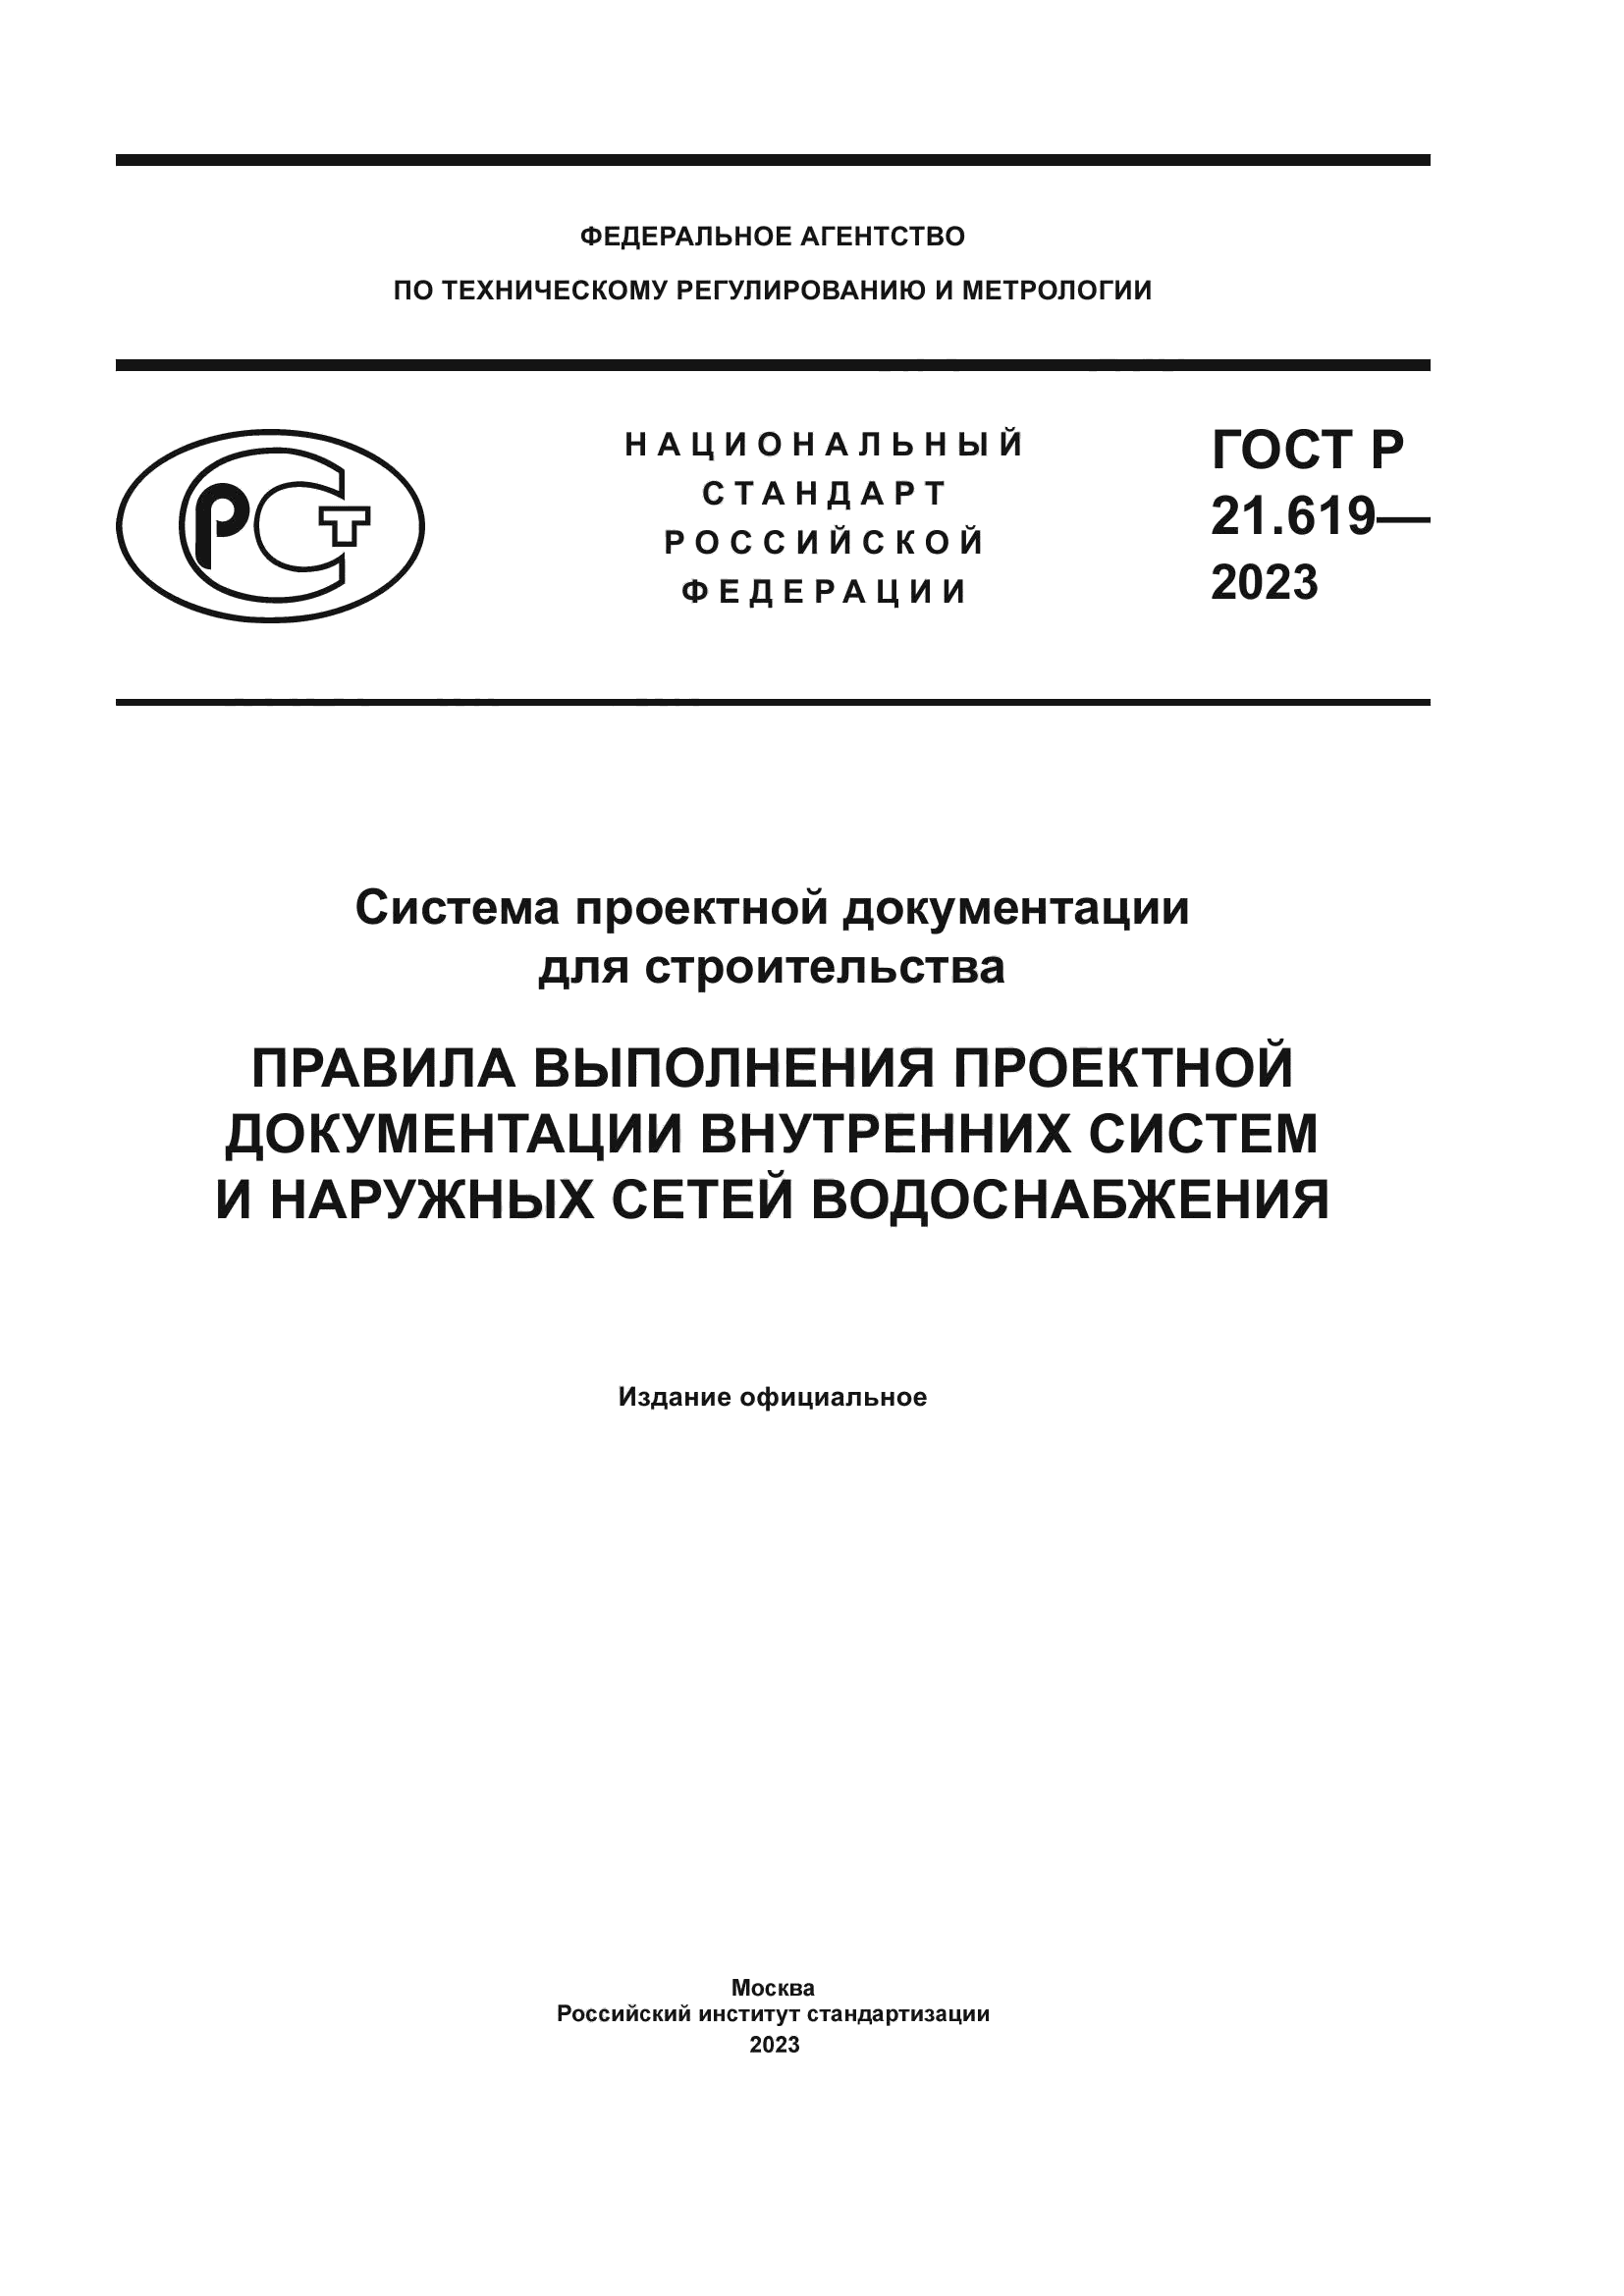 ГОСТ Р 21.619-2023